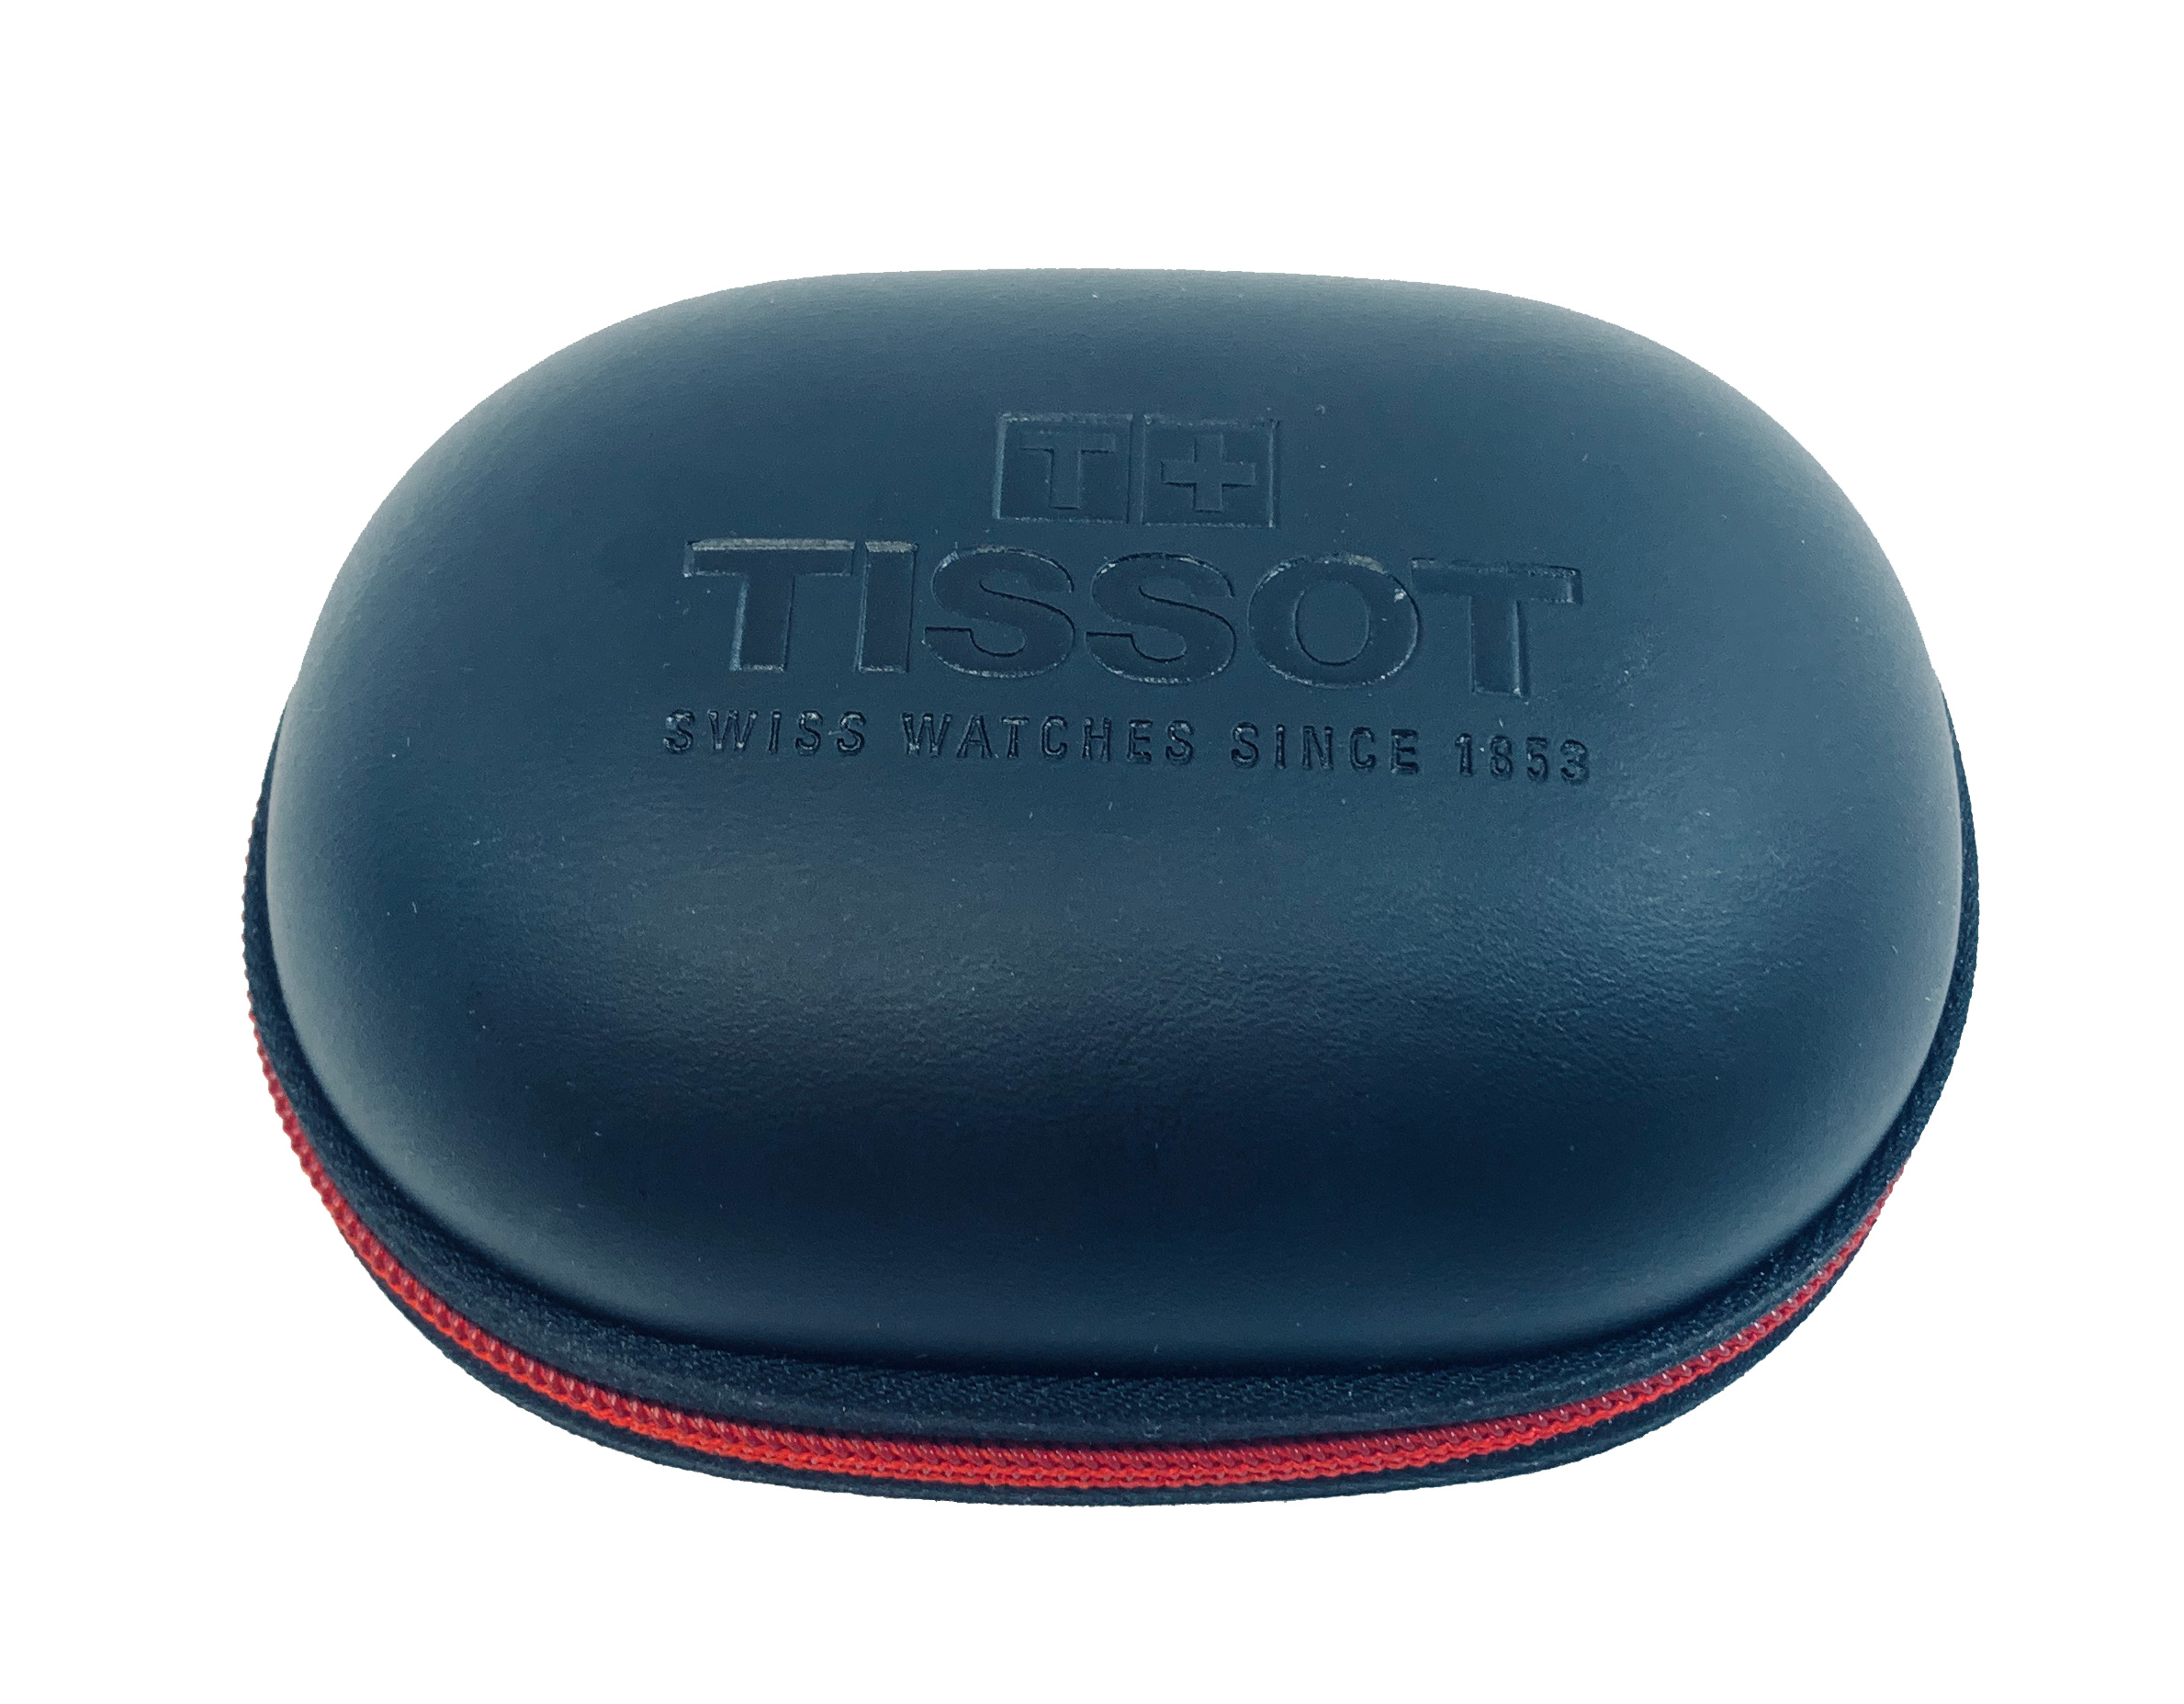 Tissot Seastar T066427 A Automatic Chronograph Diver Black Men's Watch 48mm